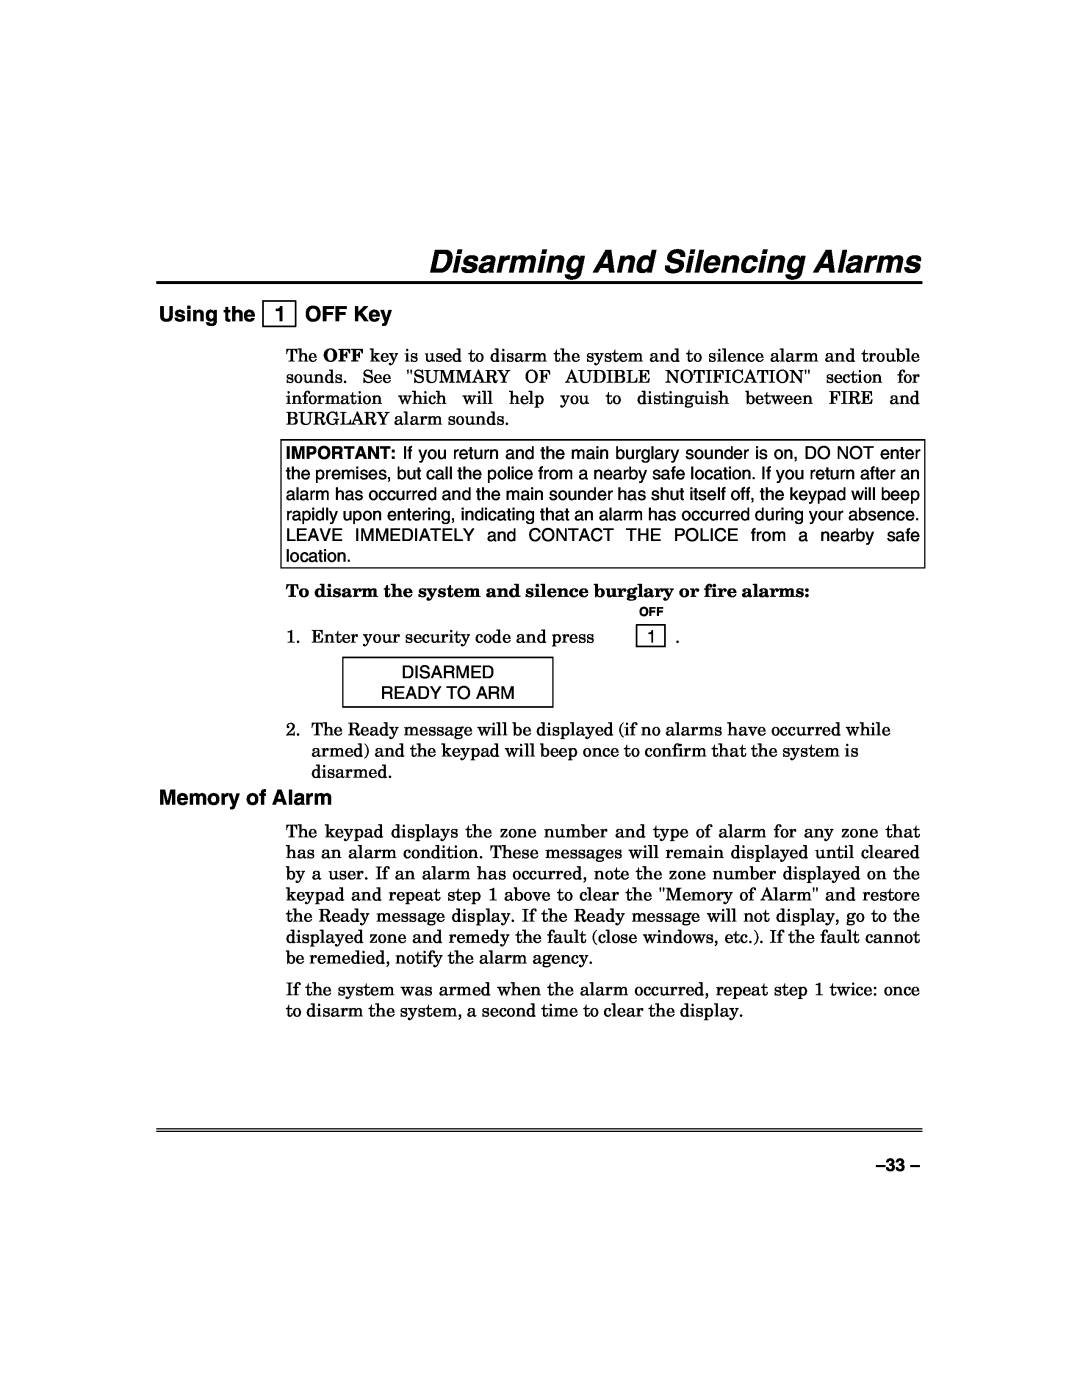 Honeywell VISTA-50PUL manual Disarming And Silencing Alarms, Using the 1 OFF Key, Memory of Alarm 